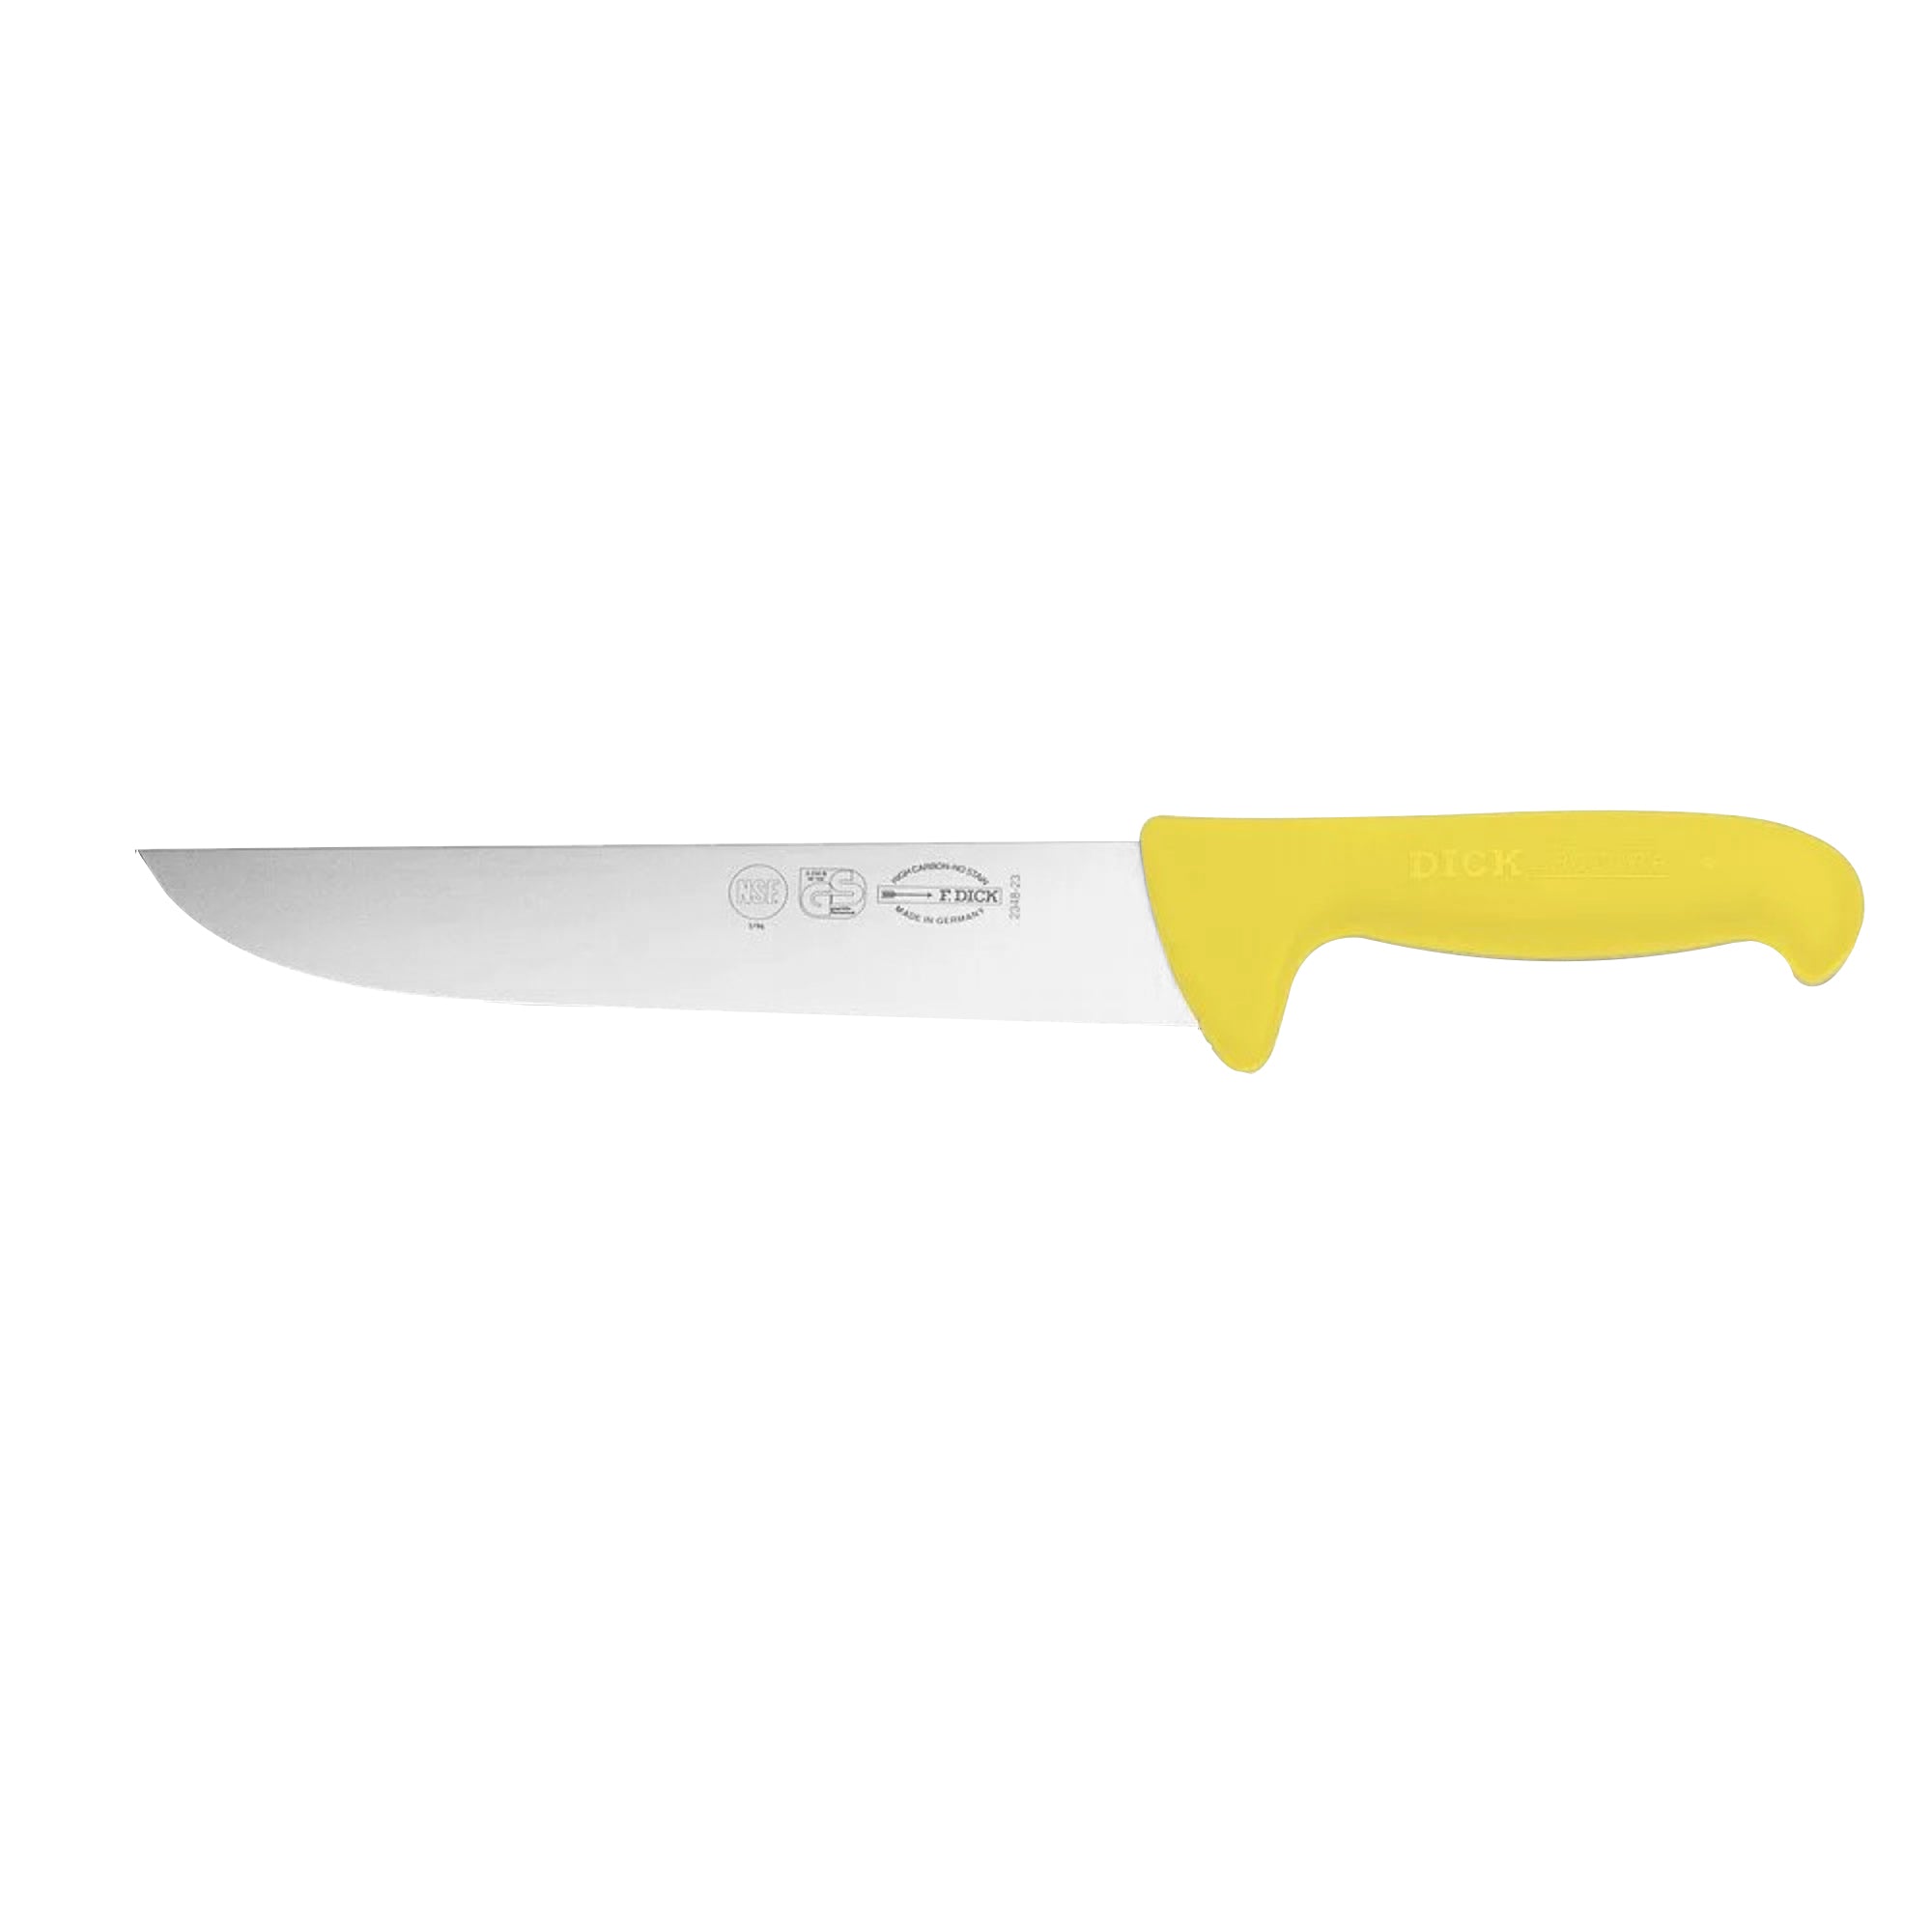 F. DICK Stick-kniv med gult håndtag - 18 cm